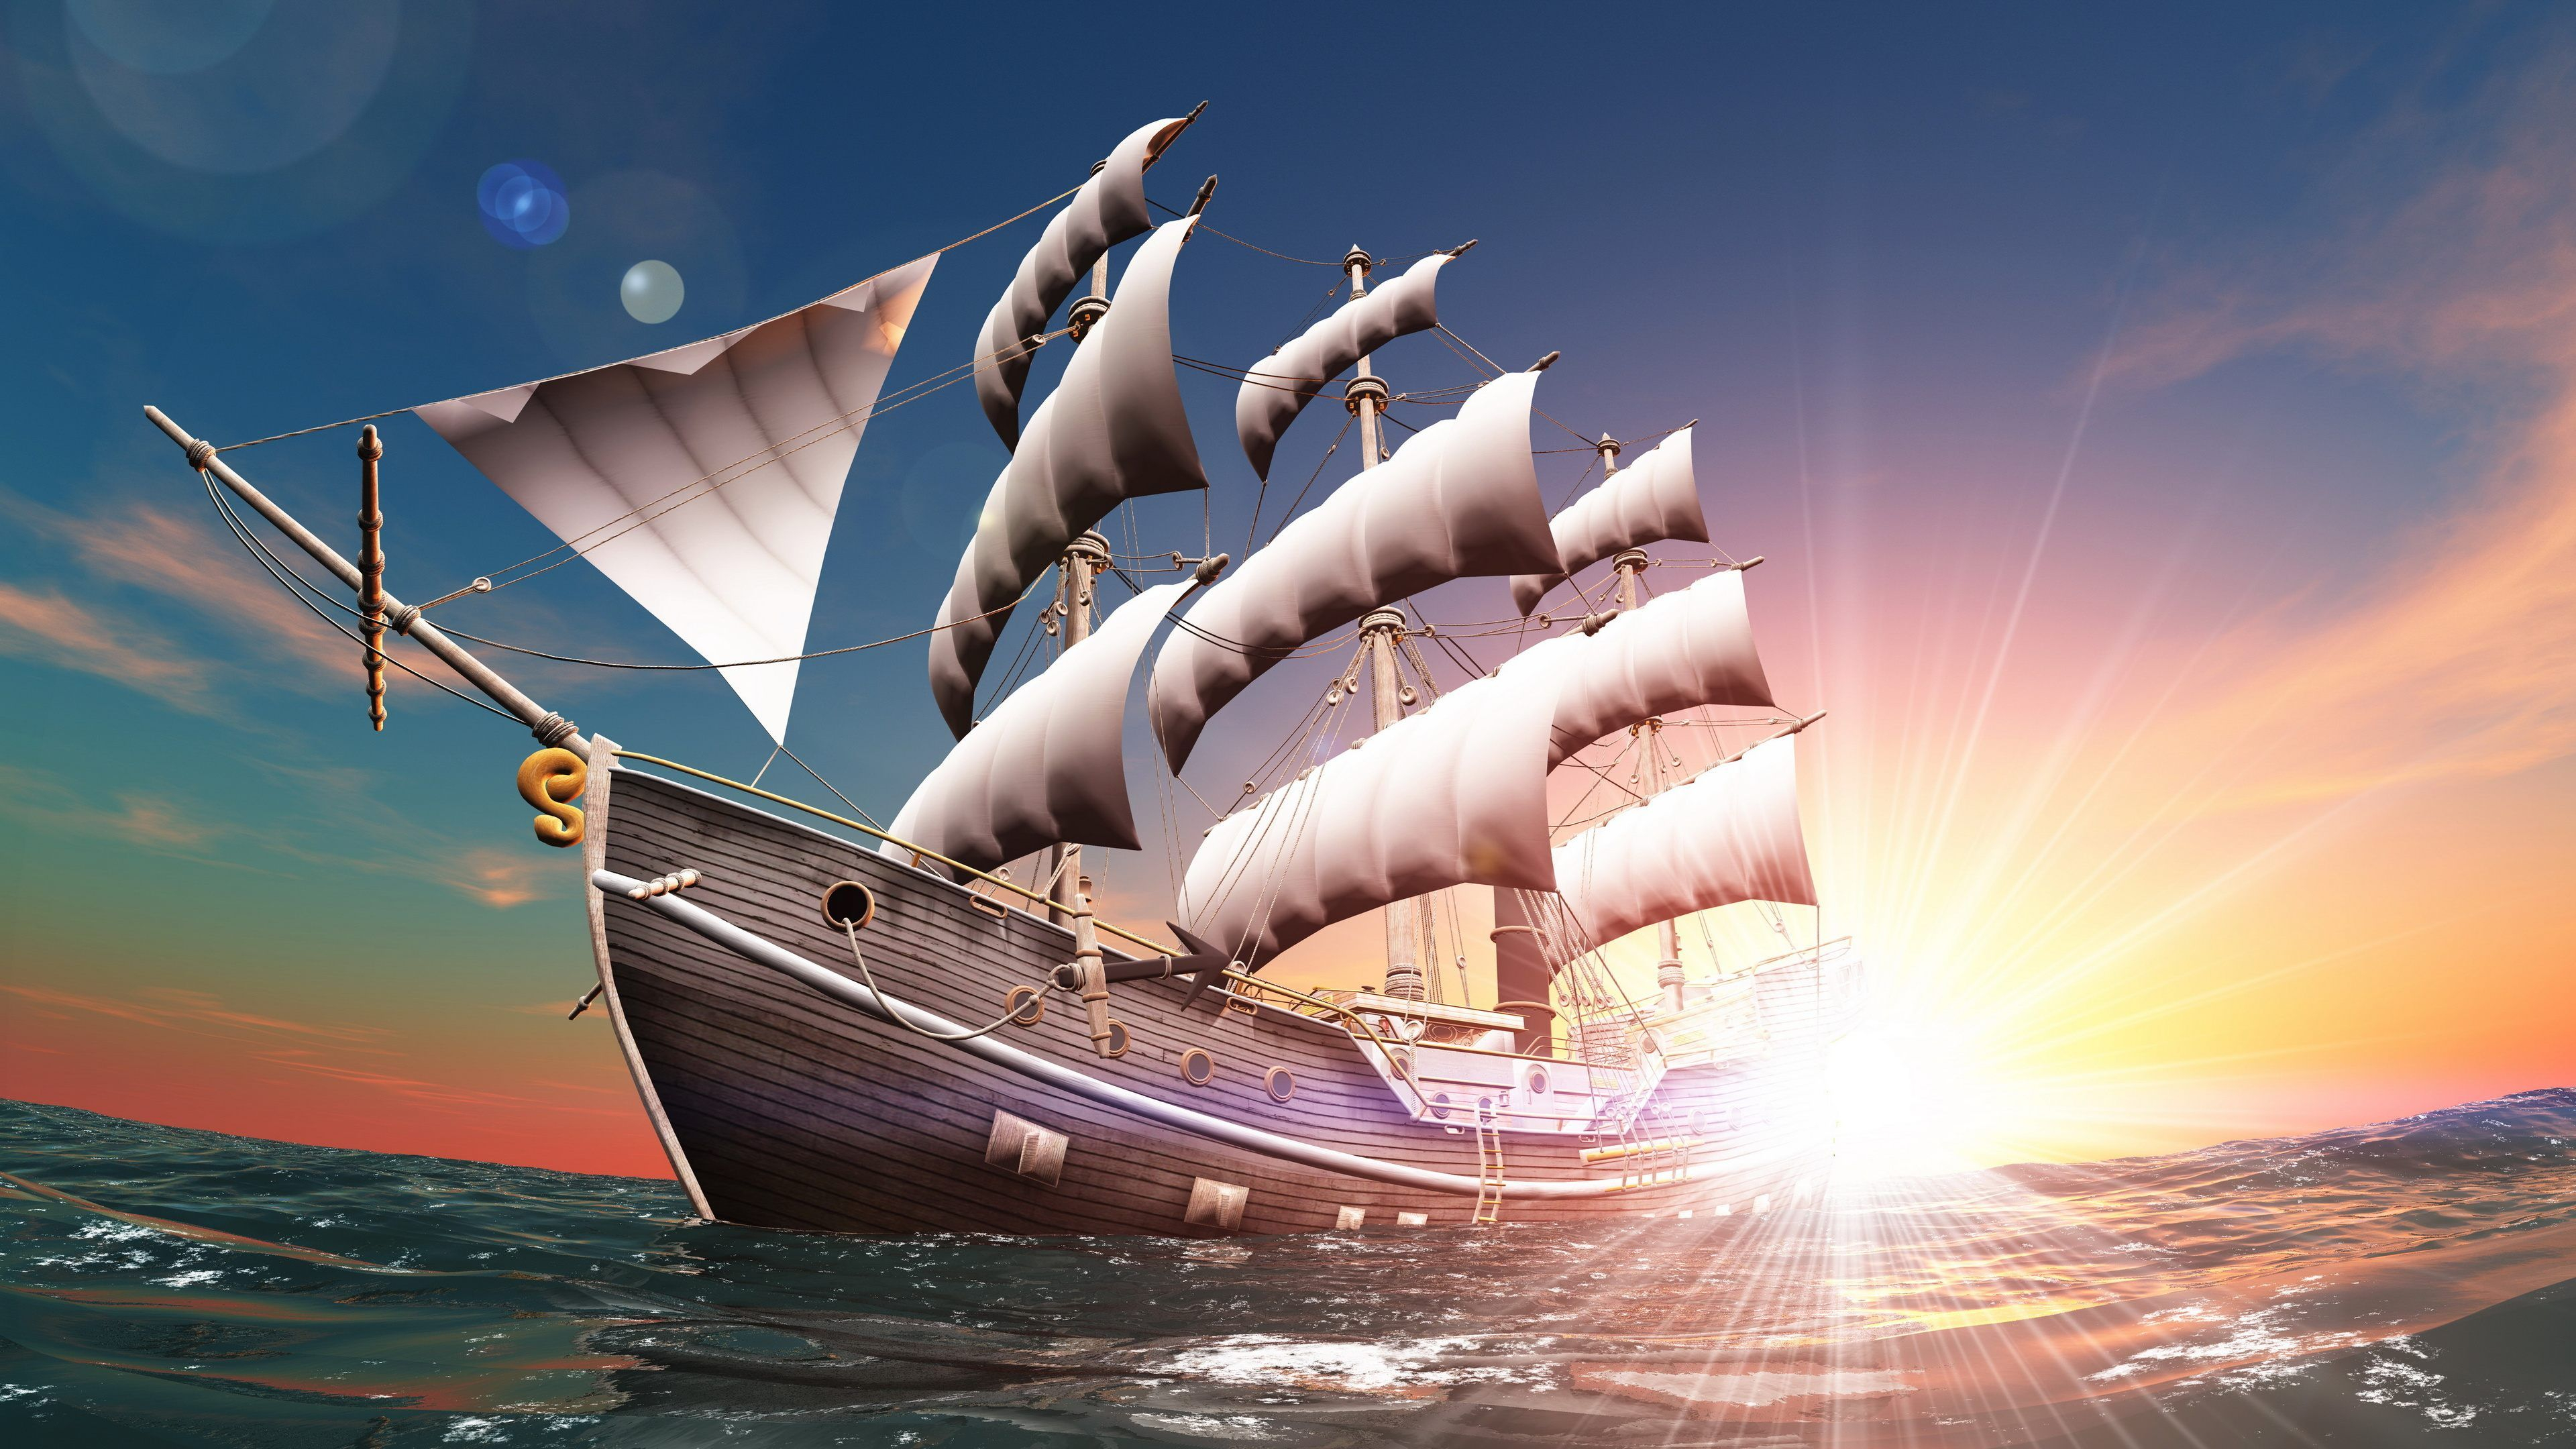 3840x2160 Sail Ship Ultra HD Wallpaper For Desktop Of Old Sailing Ship | Old sailing ships, Sailing ships, Hd wallpaper